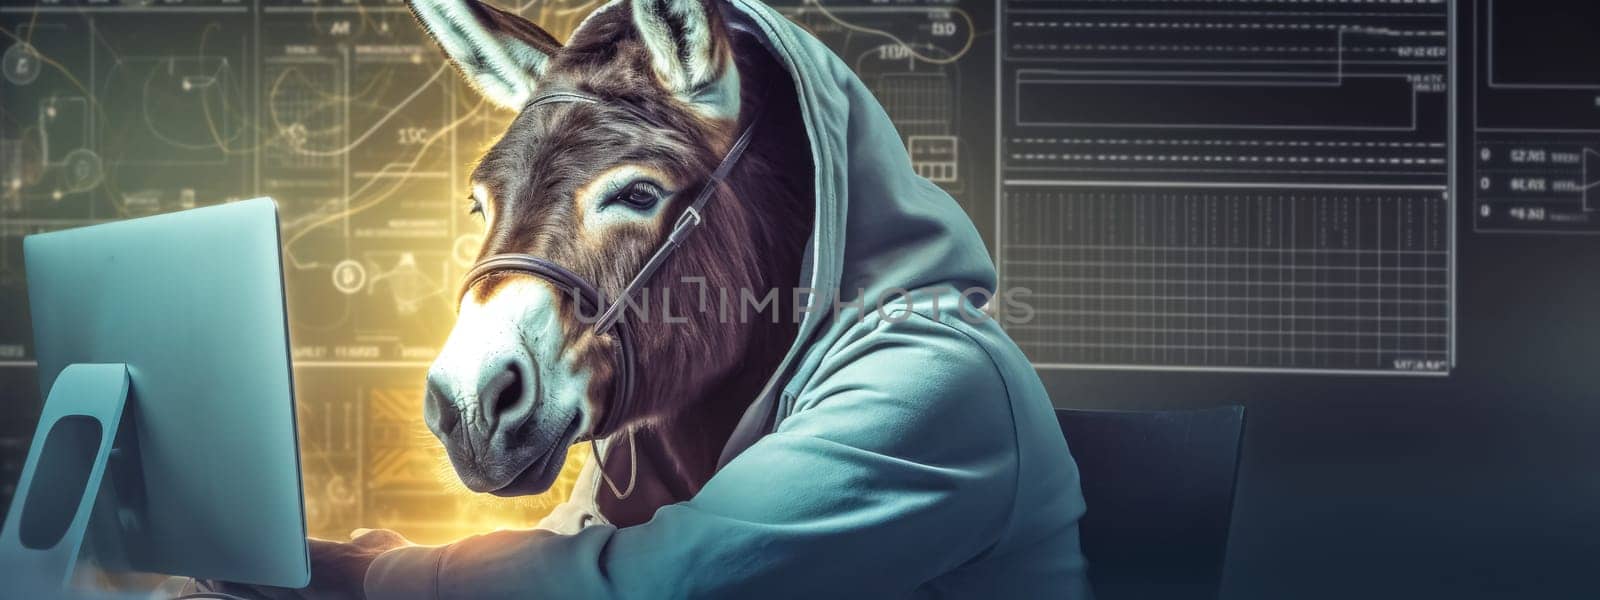 Tech-savvy donkey using computer with digital interface background by Edophoto